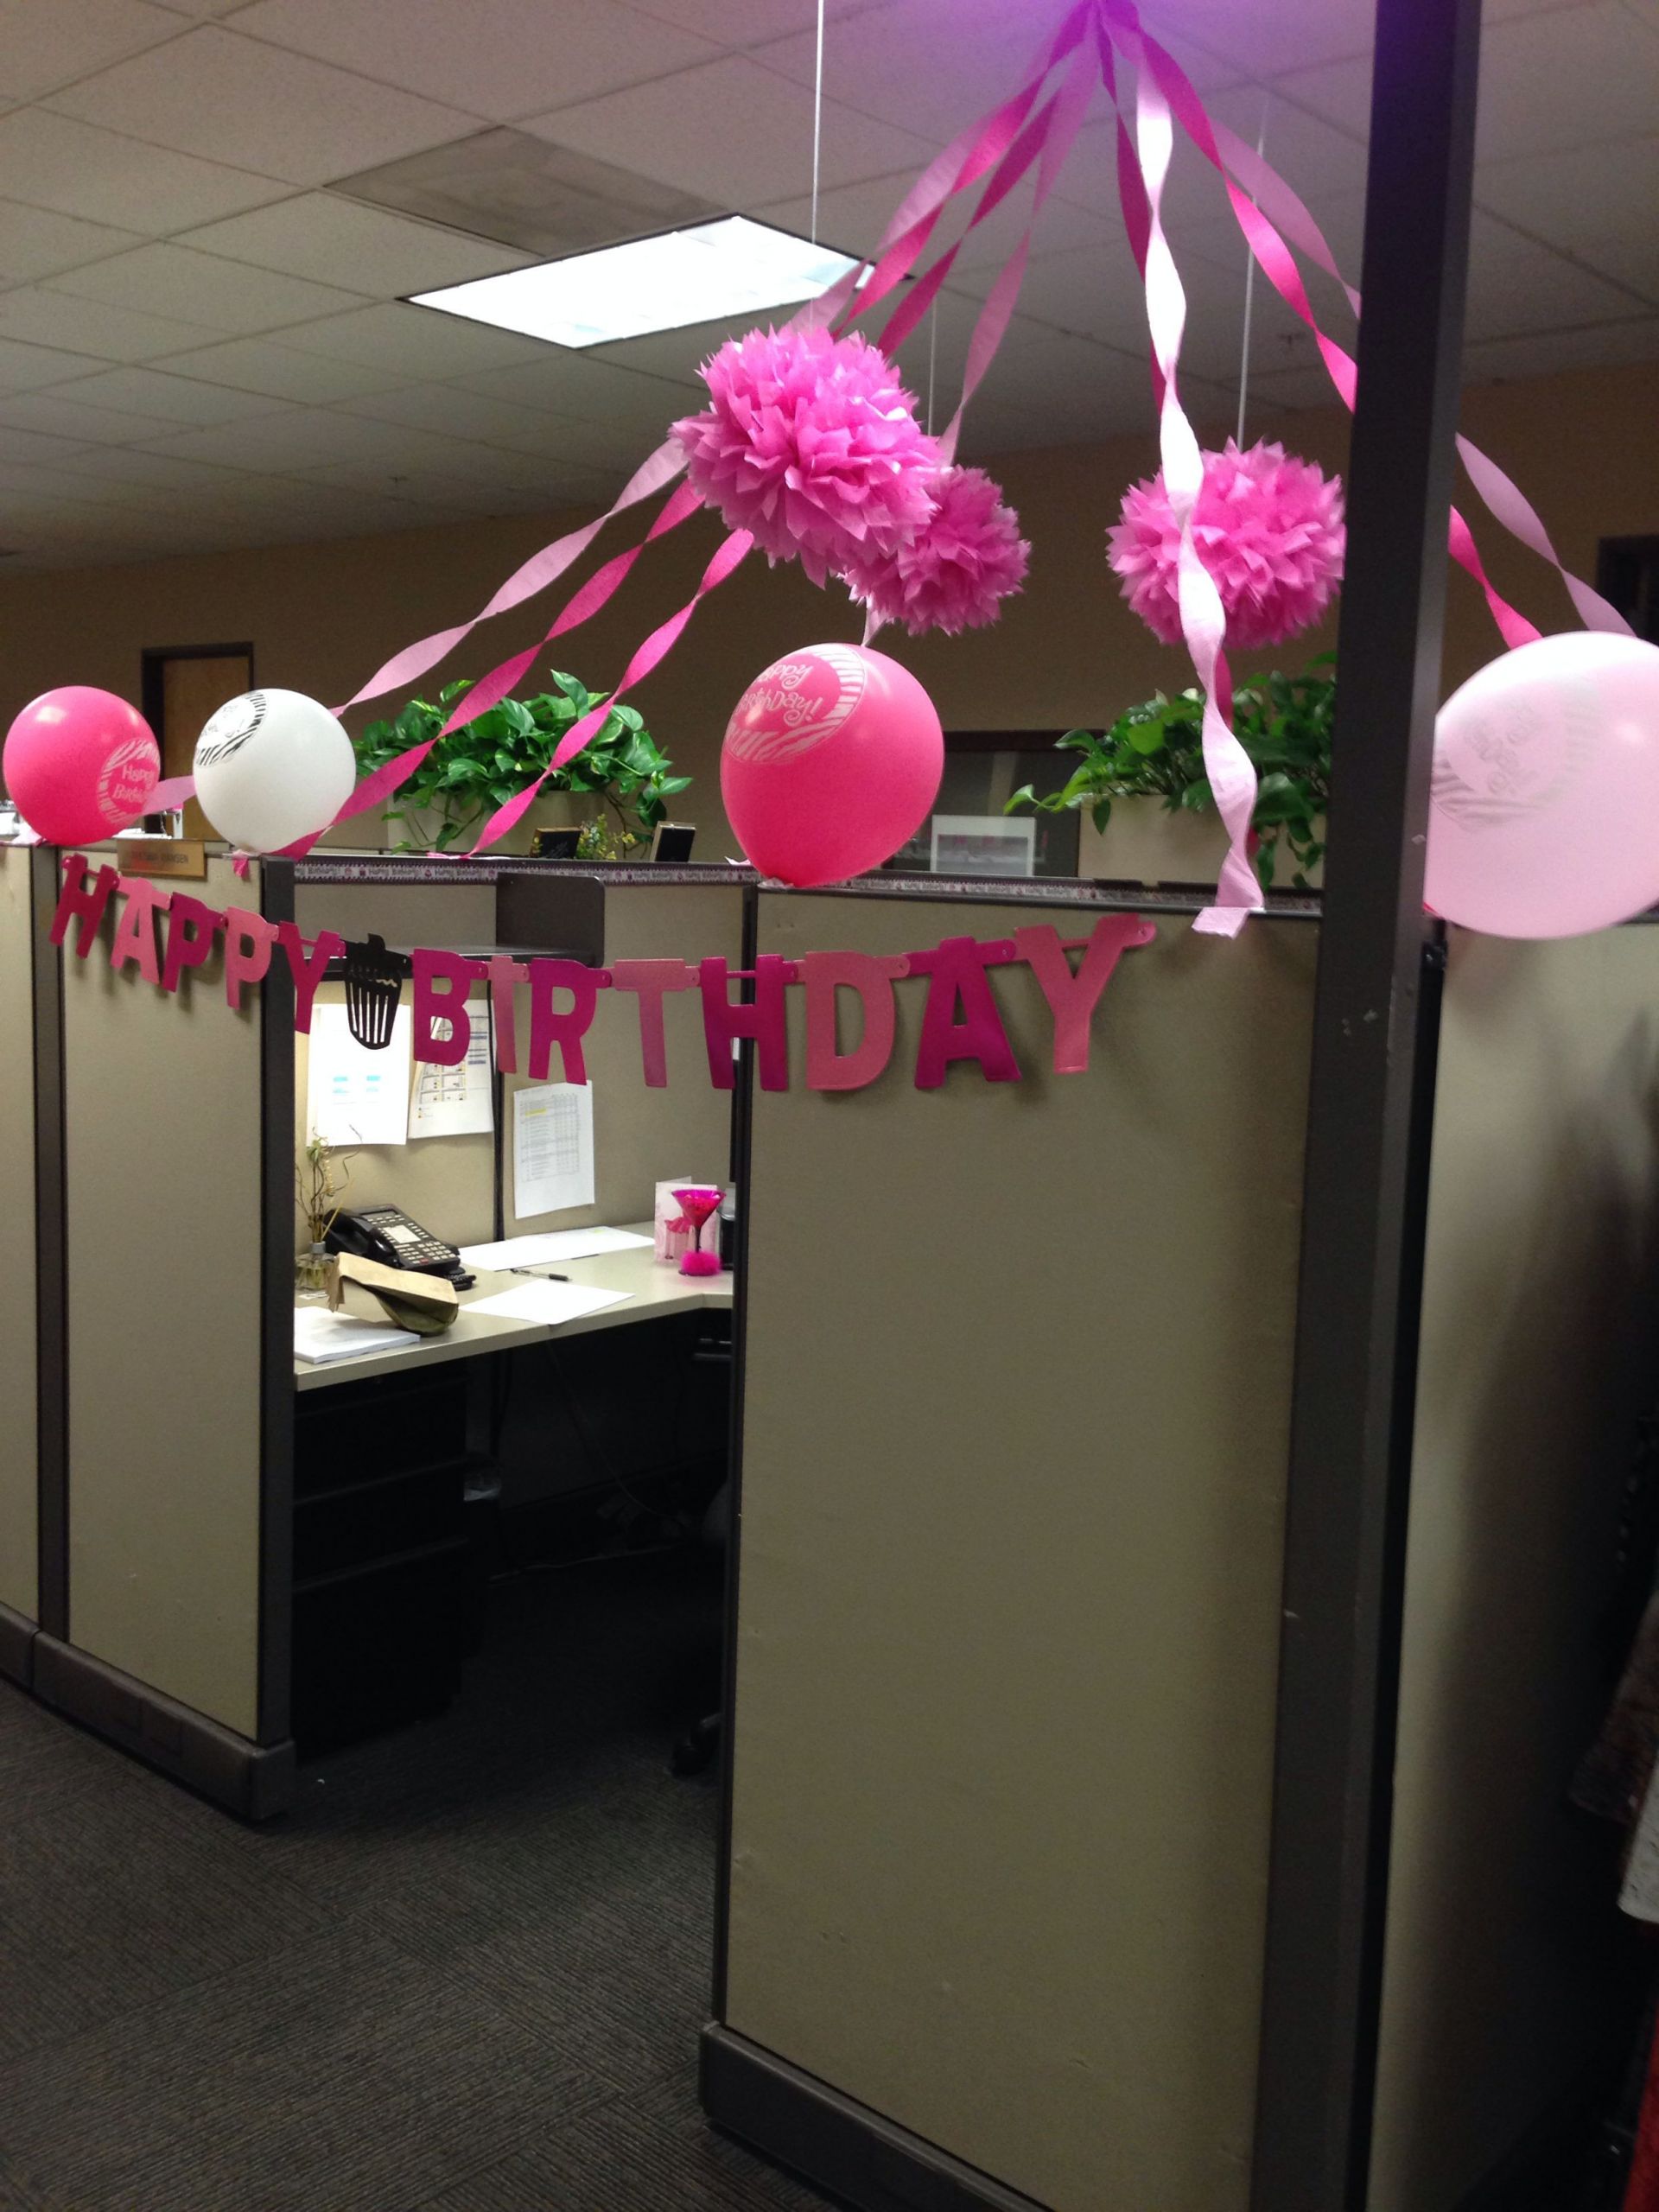 Cubicle Birthday Decorations
 My birthday cubicle …